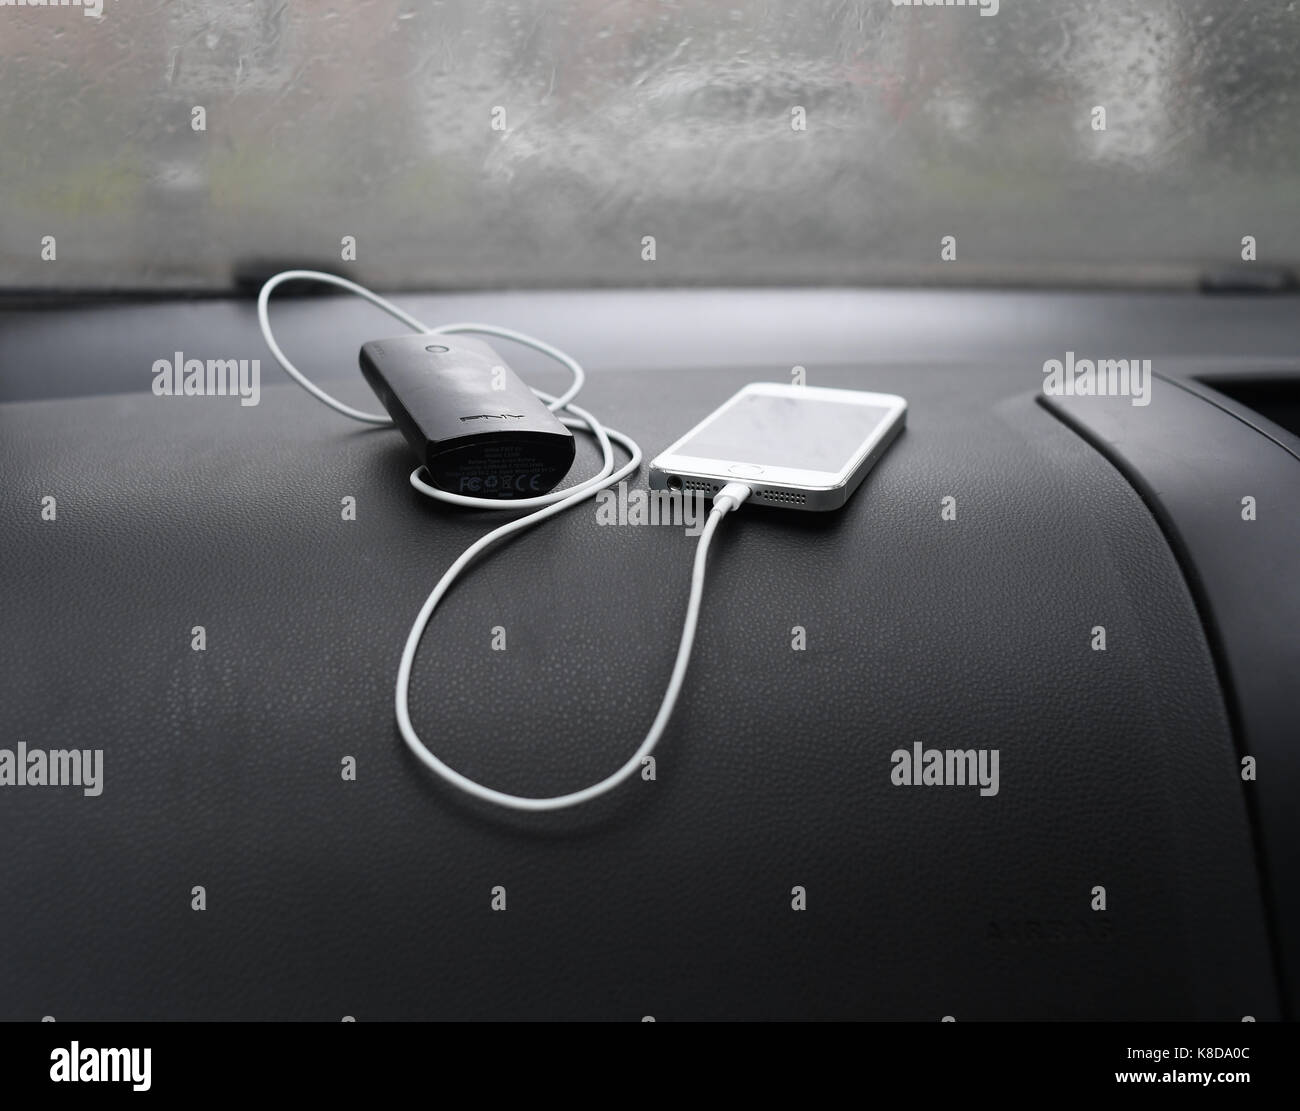 Iphone 5s mit externem Ladegerät am Armaturenbrett des Autos Stockfoto